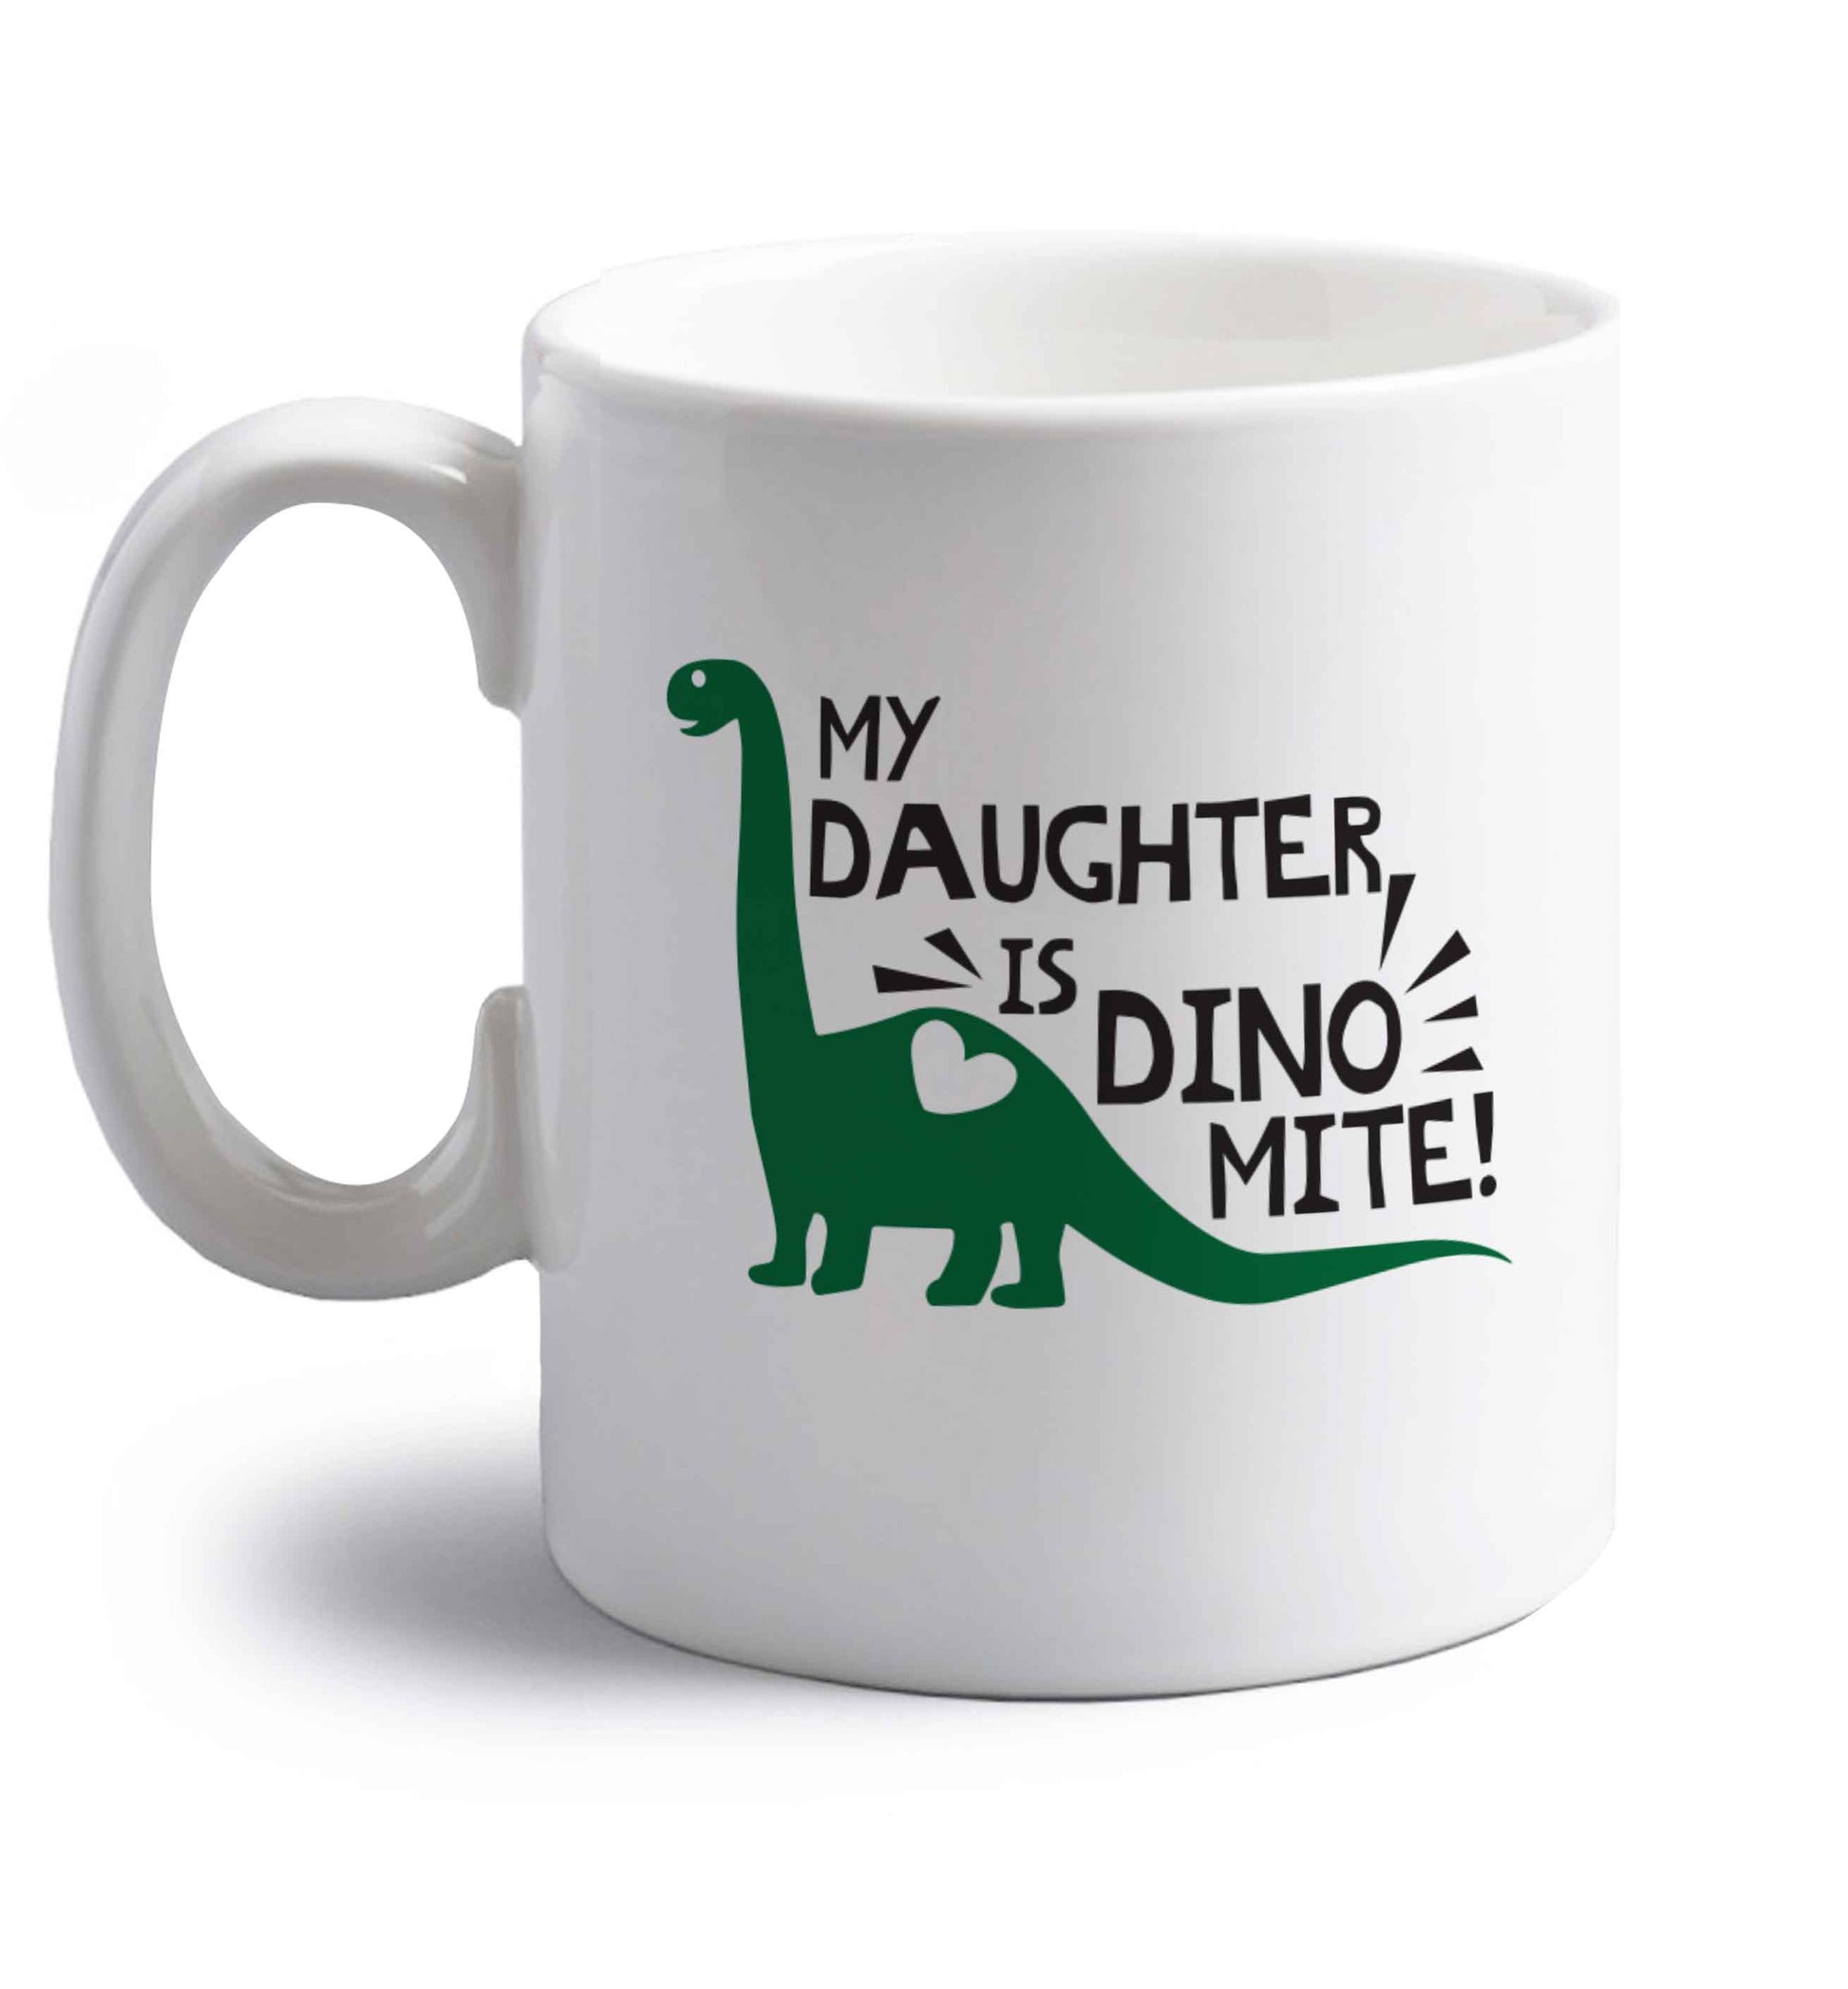 My daughter is dinomite! right handed white ceramic mug 